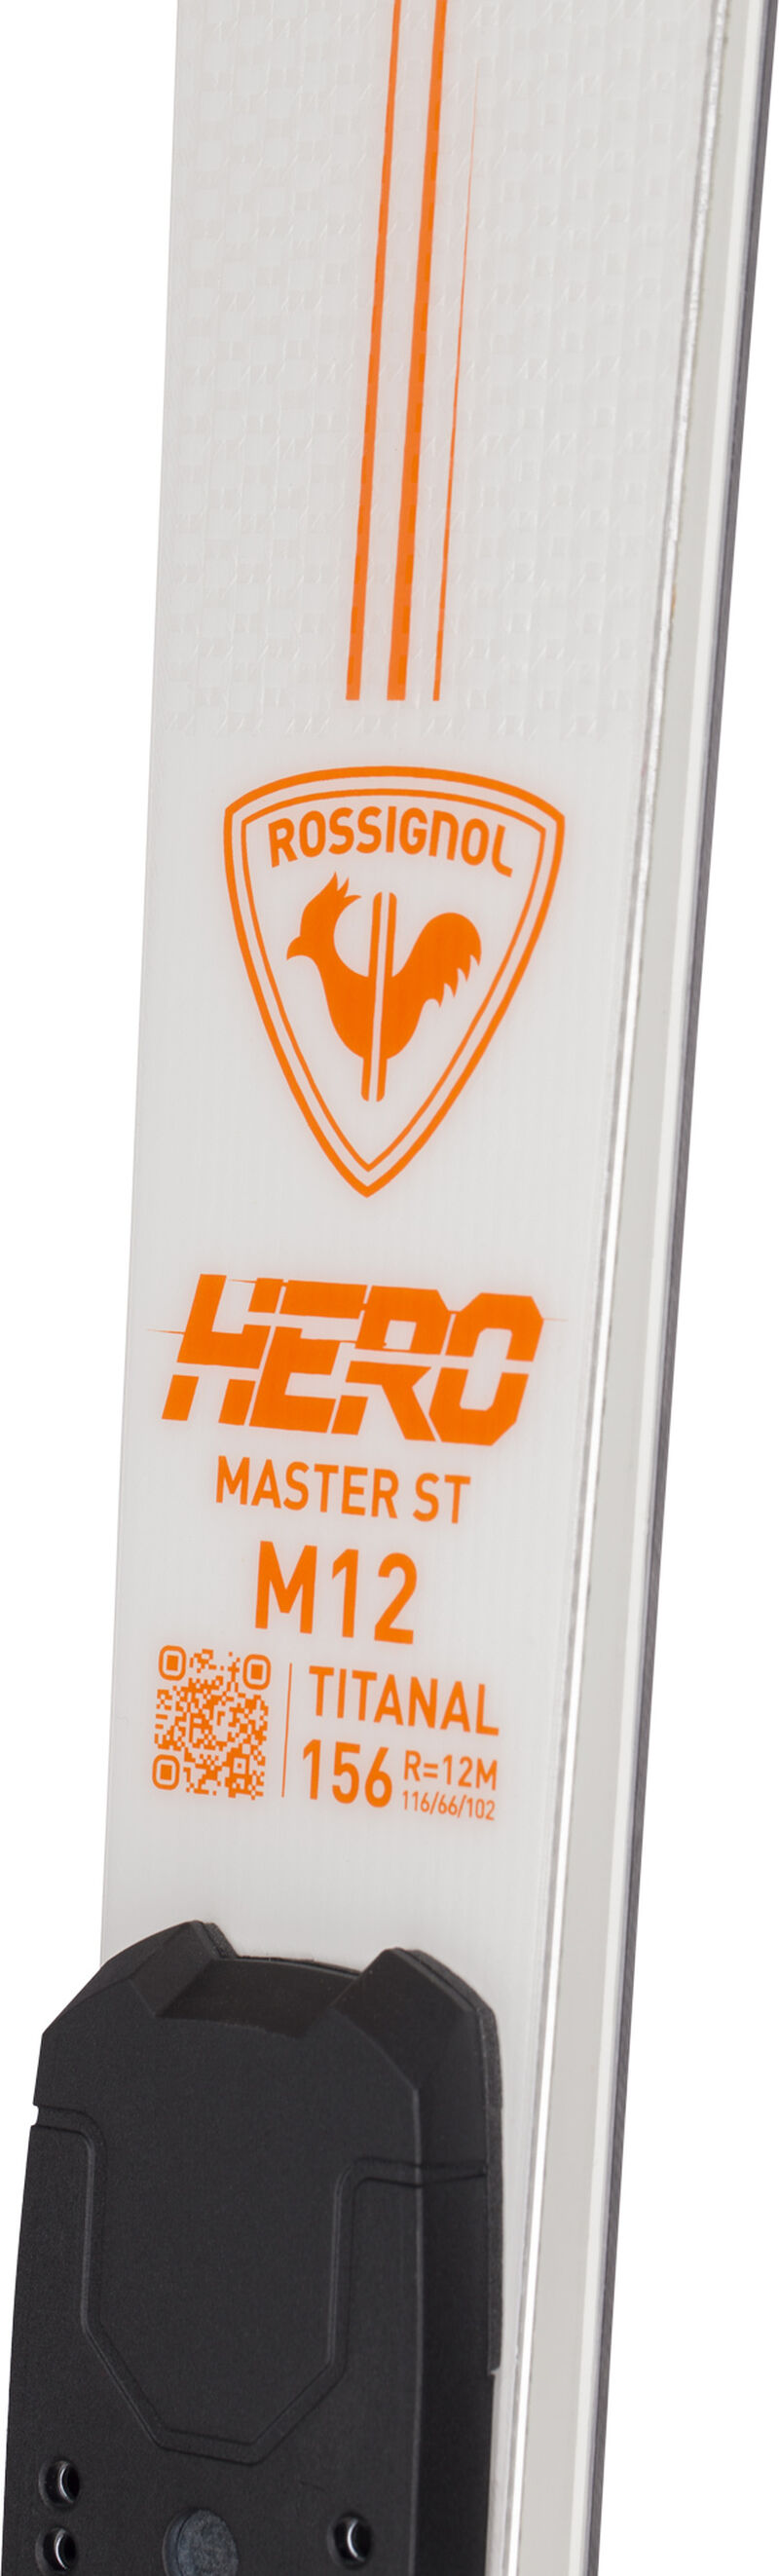 UNISEX RACING SKIER HERO MASTER ST R22